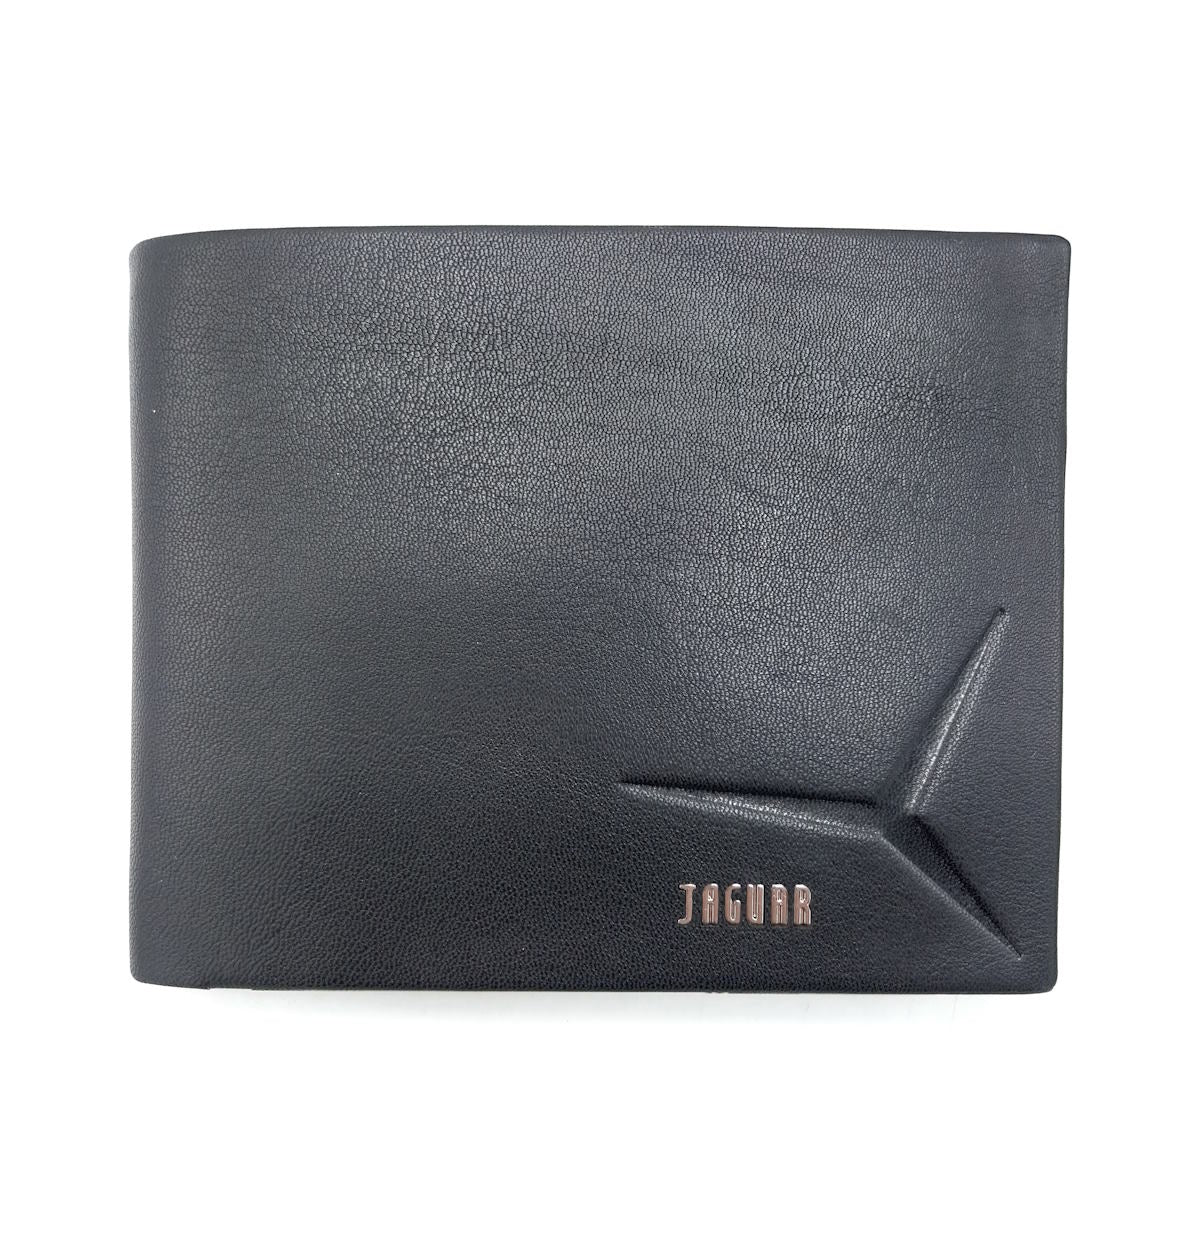 Genuine leather wallet, Jaguar, art. PF800-1